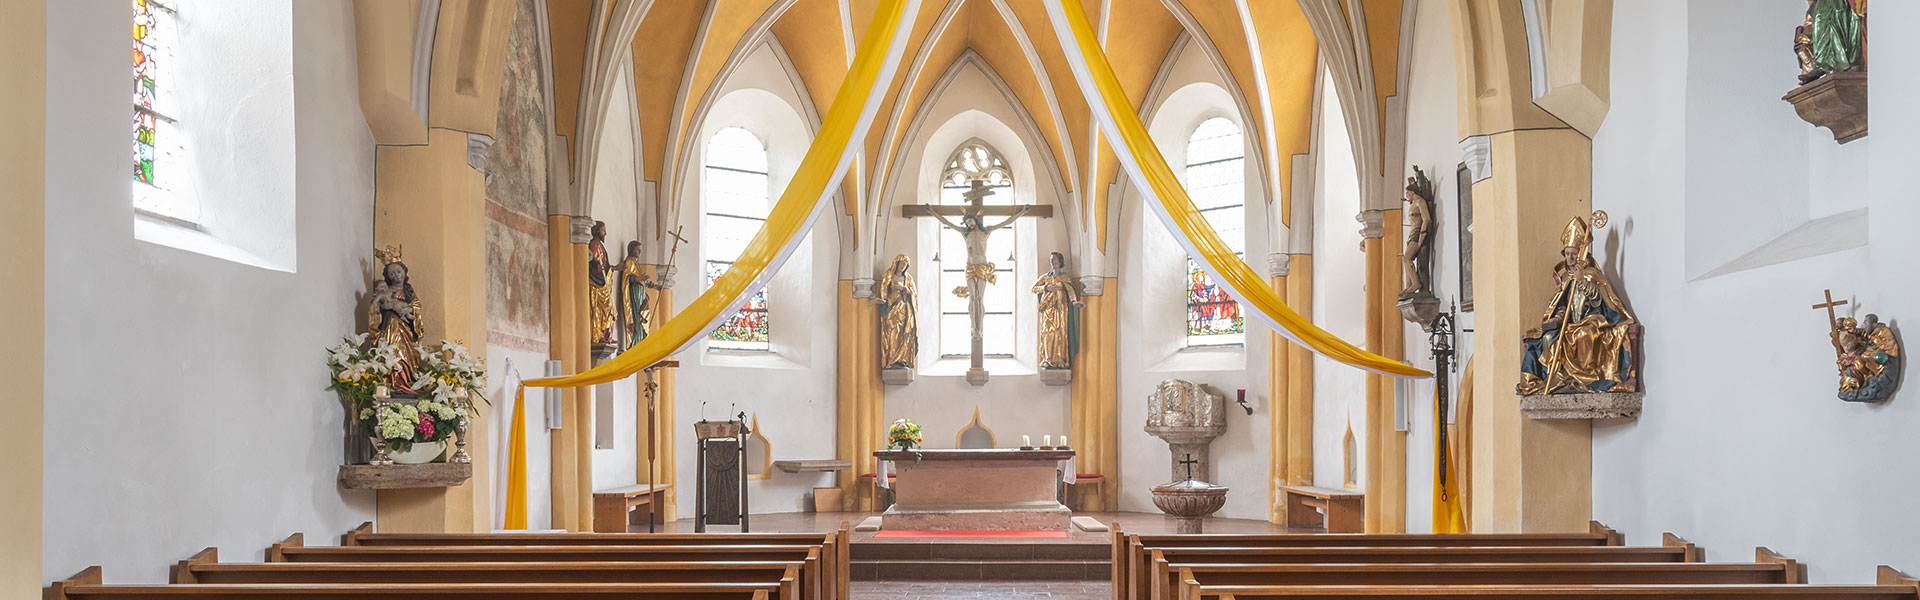 Altar Pfarrkirche St. Andreas Staudach-Egerndach